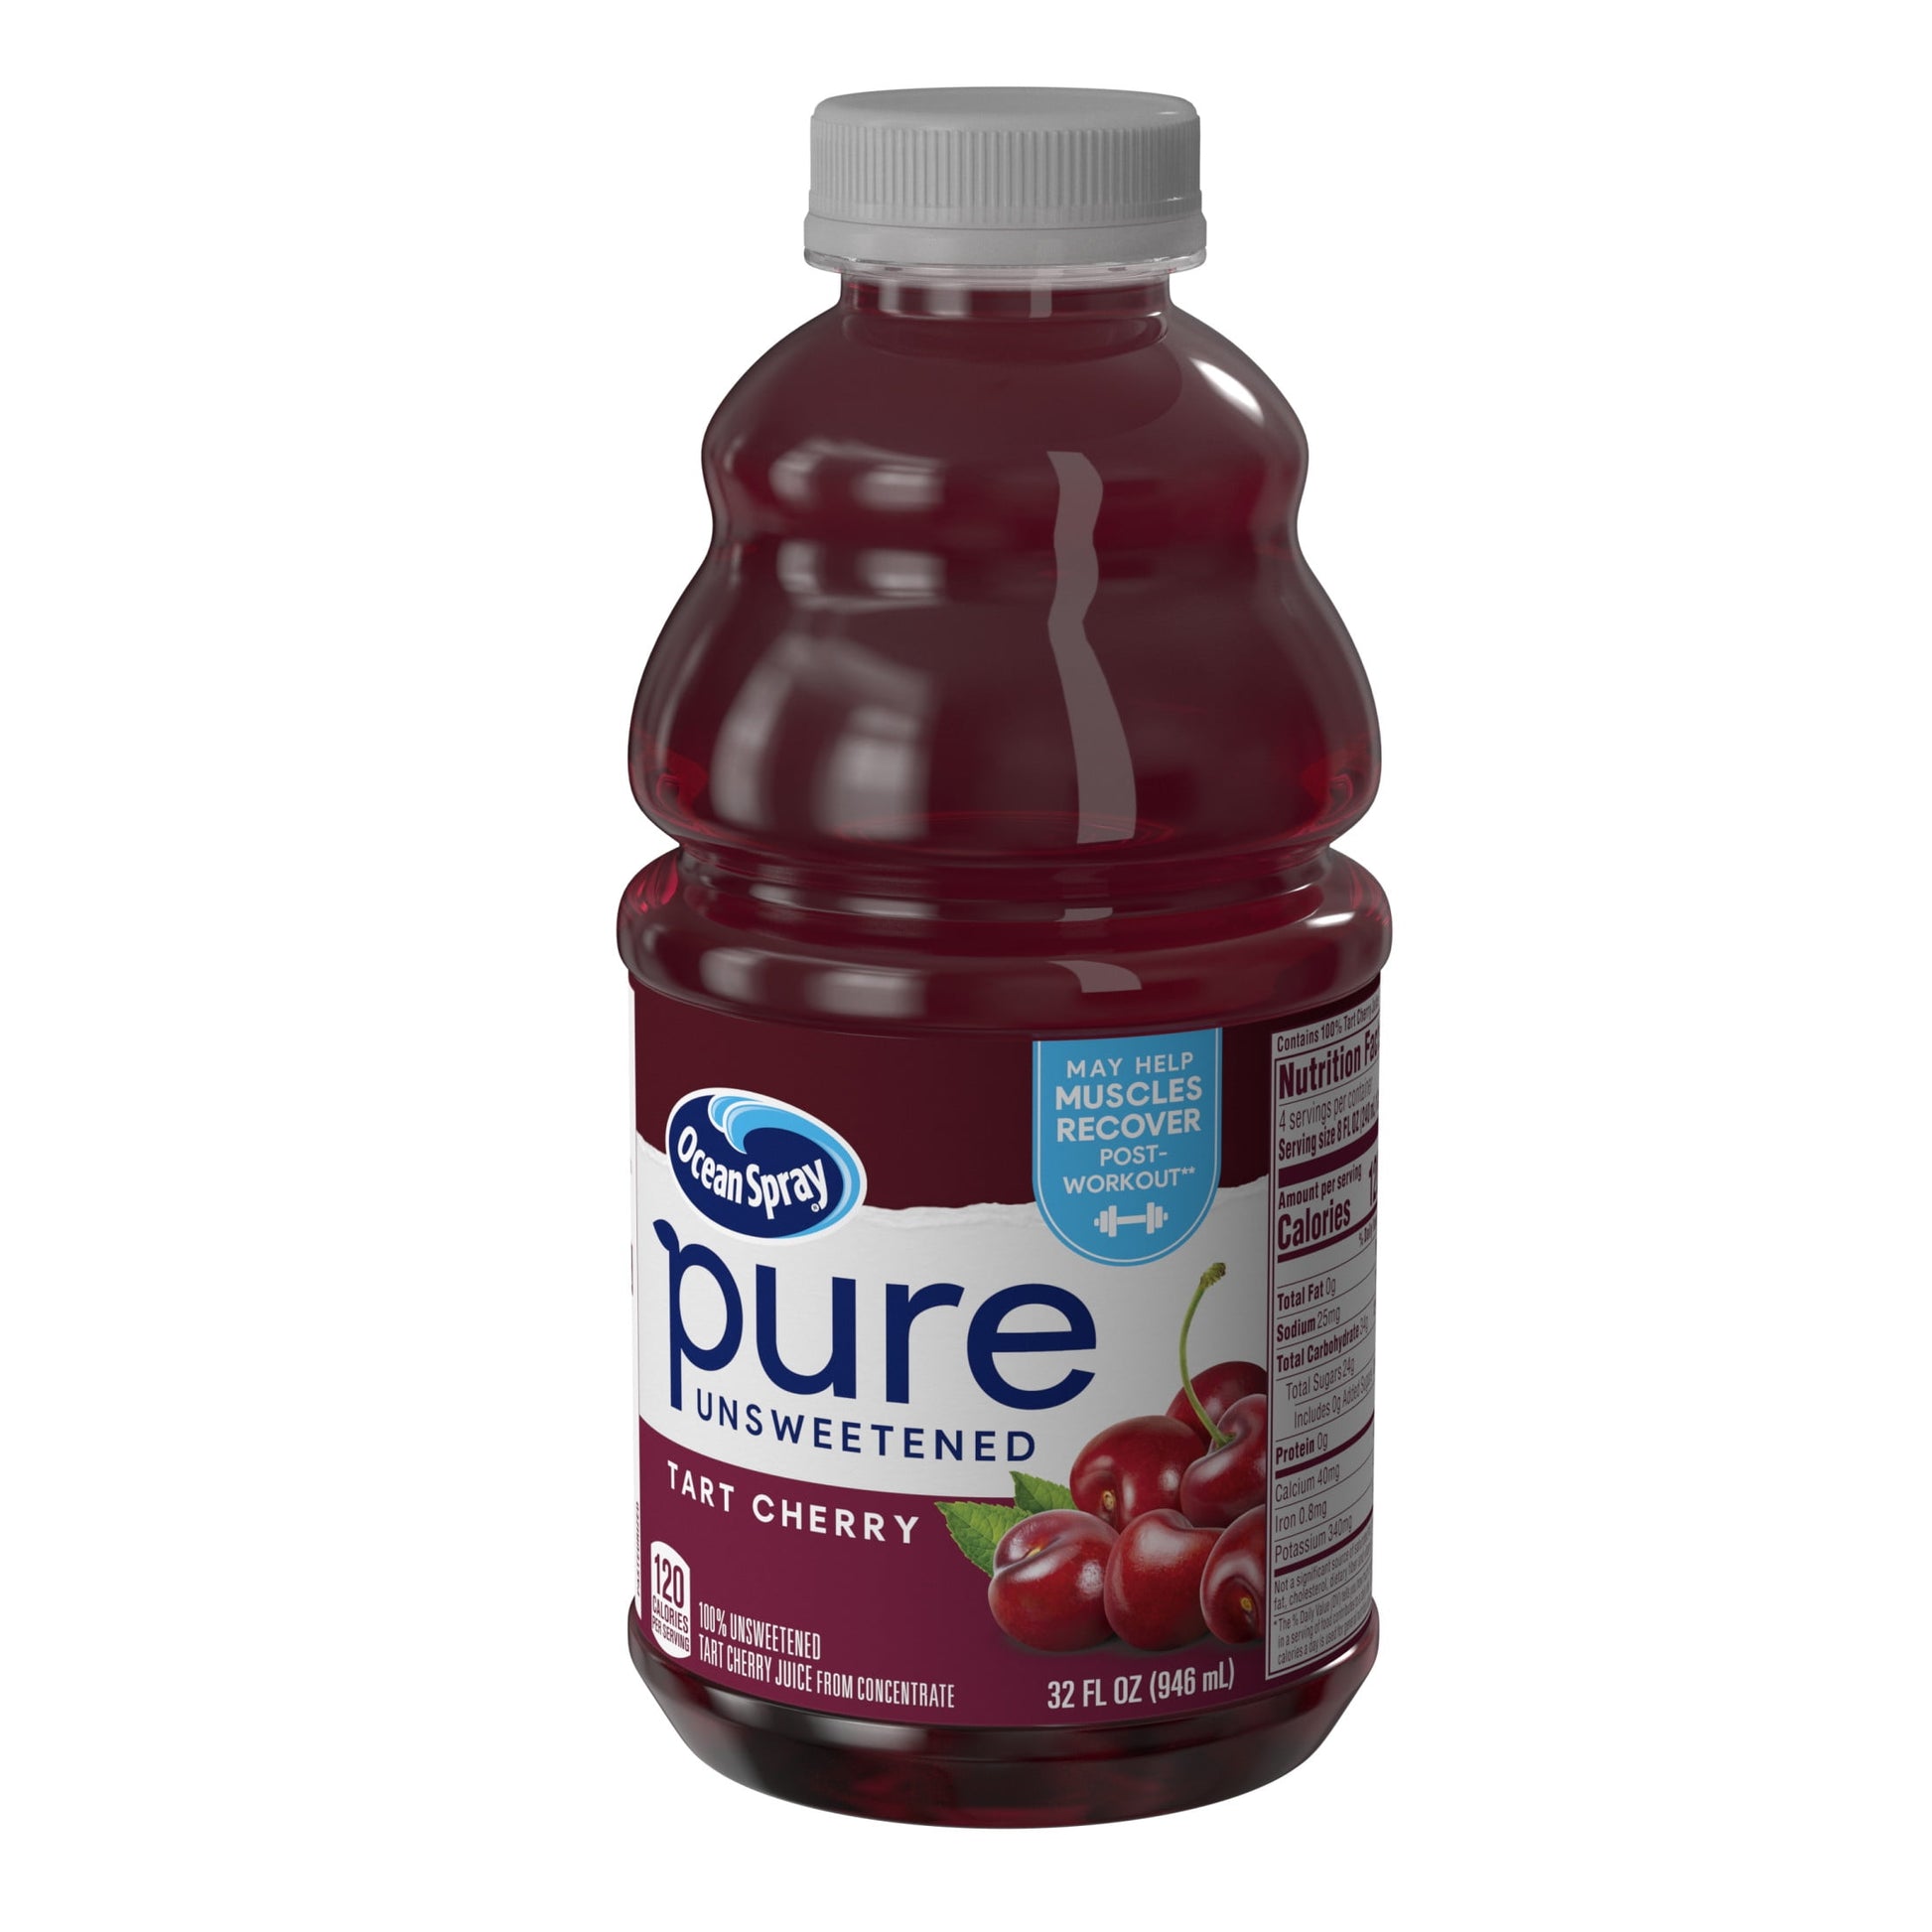 ® Pure Unsweetened Tart Cherry, 100% Tart Cherry Juice, 32 Fl Oz Bottle